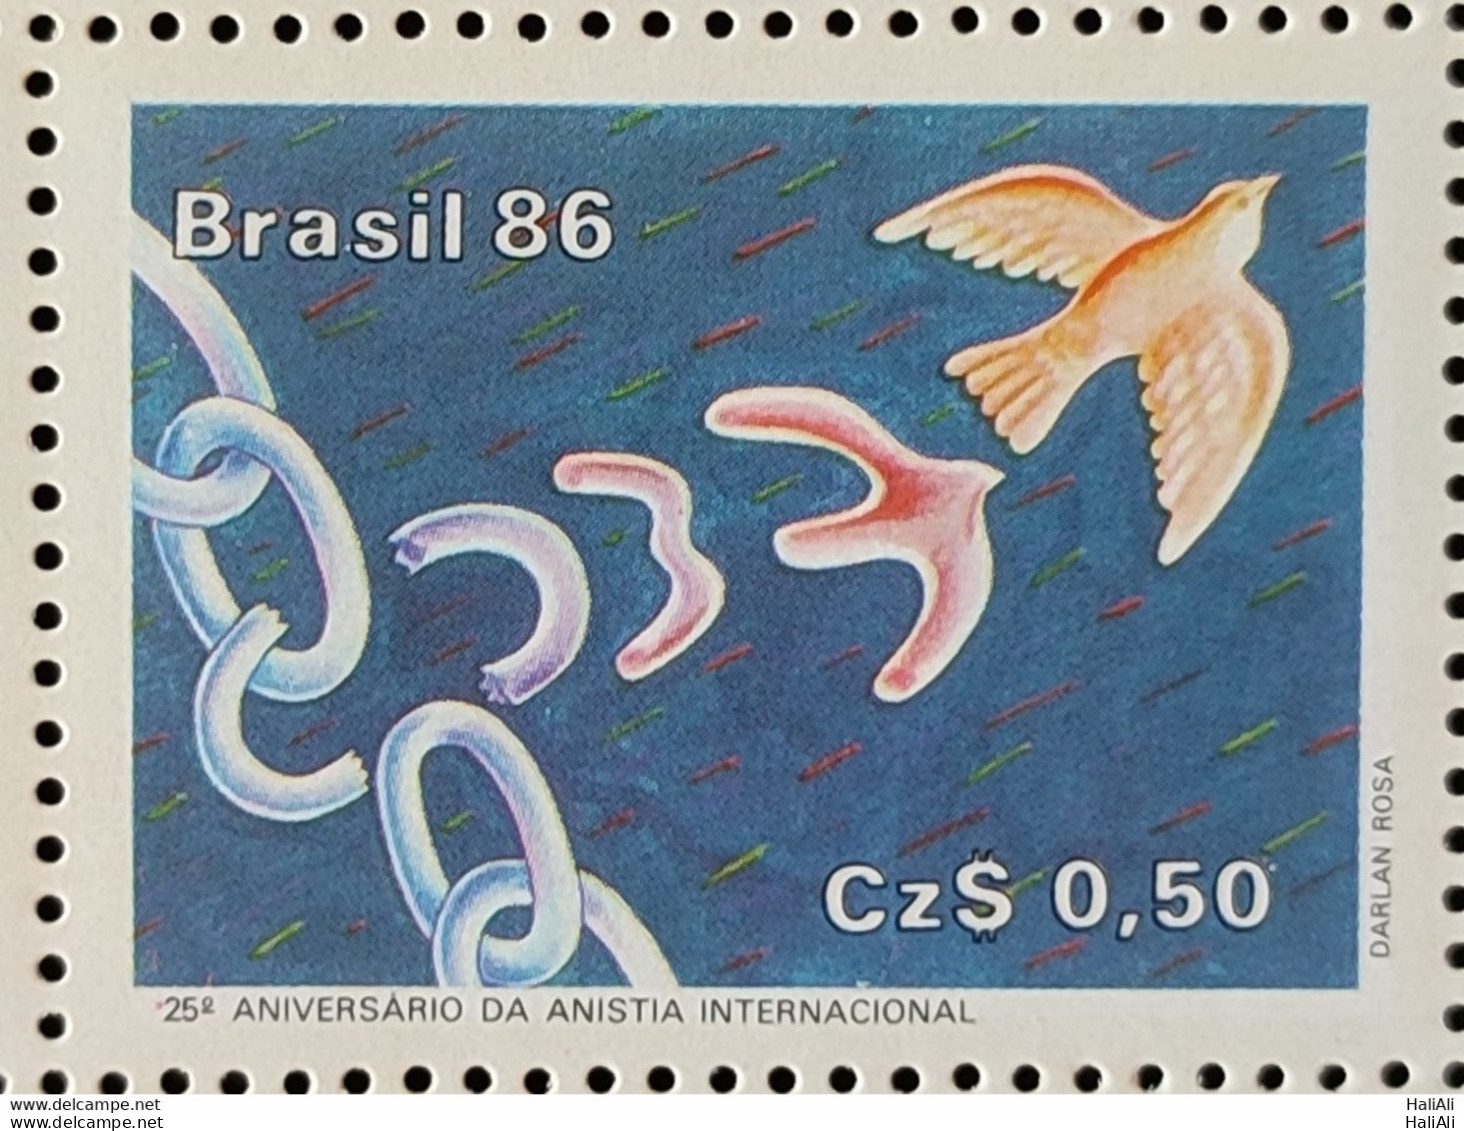 C 1511 Brazil Stamp 25 Years Of International Amnesty Law 1986.jpg - Unused Stamps